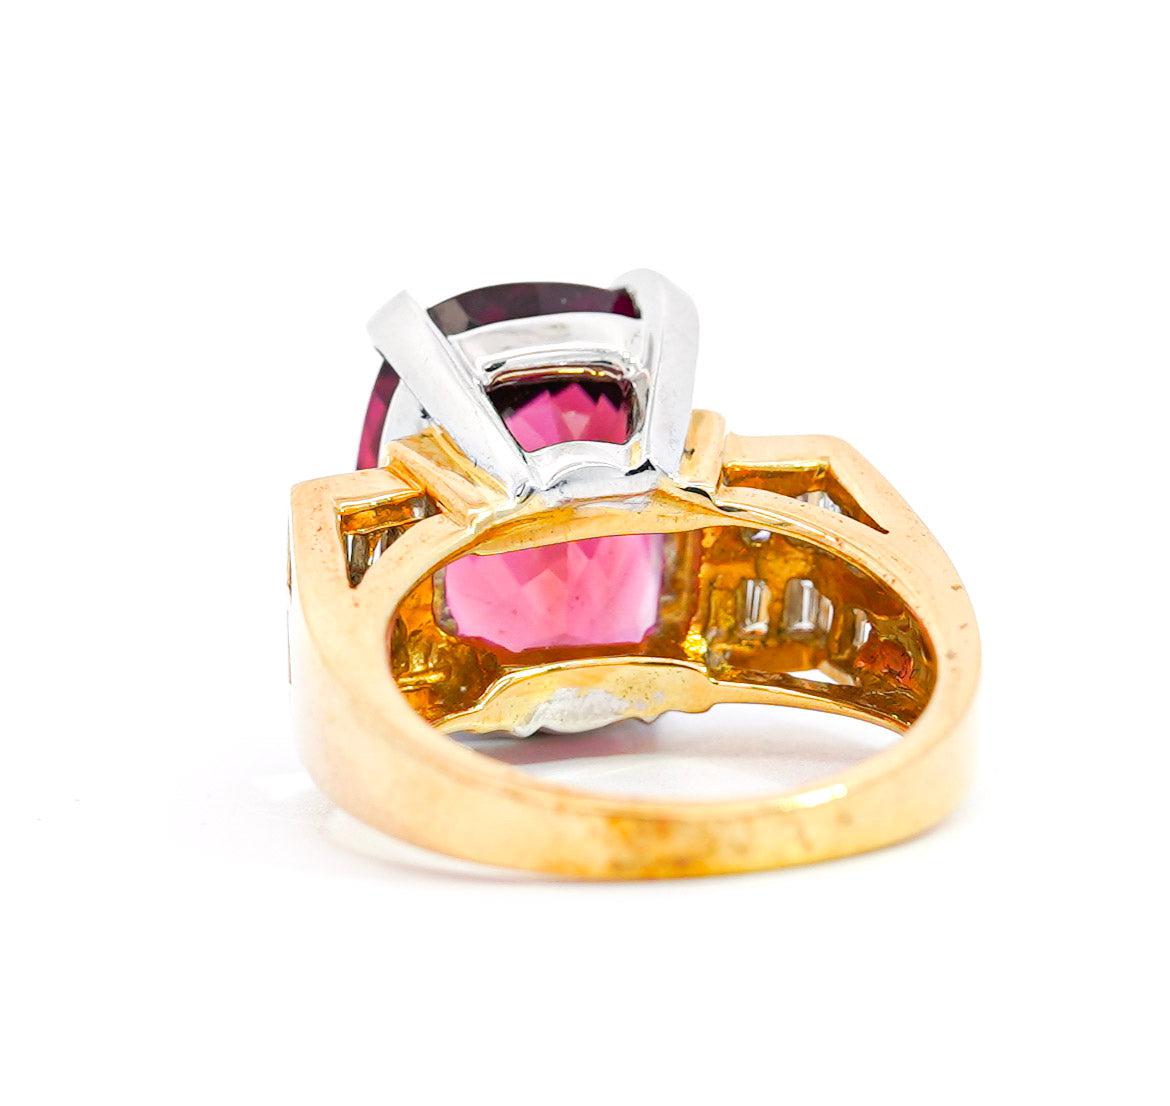 Vintage 13.50 Carat GIA Certified Purplish-Pink Tourmaline and Diamond 18K and Platinum Ring